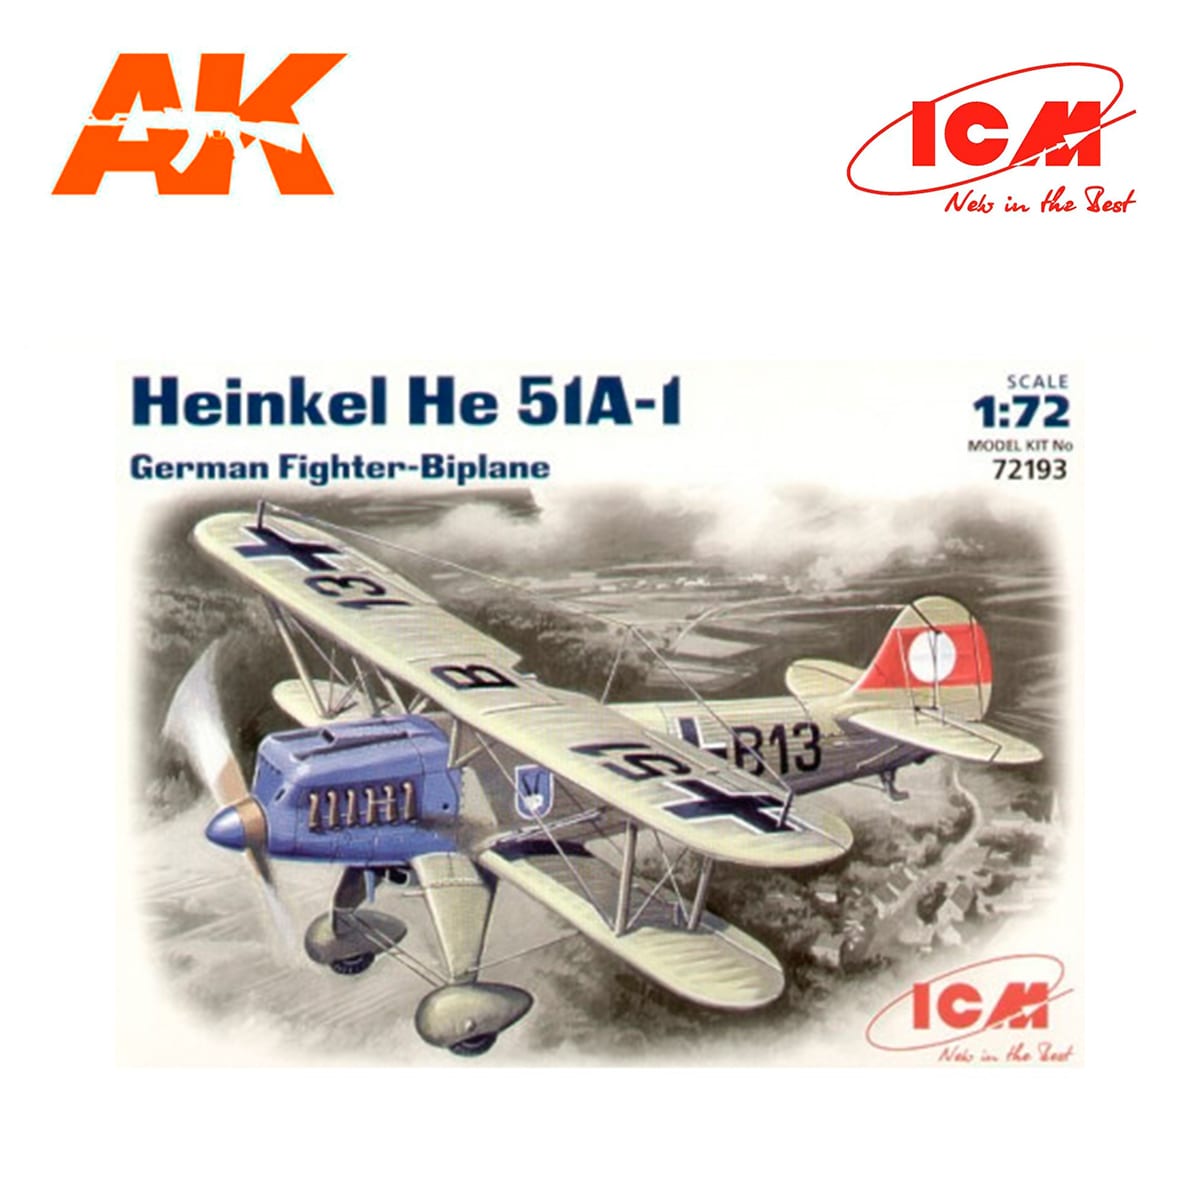 Heinkel He 51A-1, German Biplane Fighter 1/72